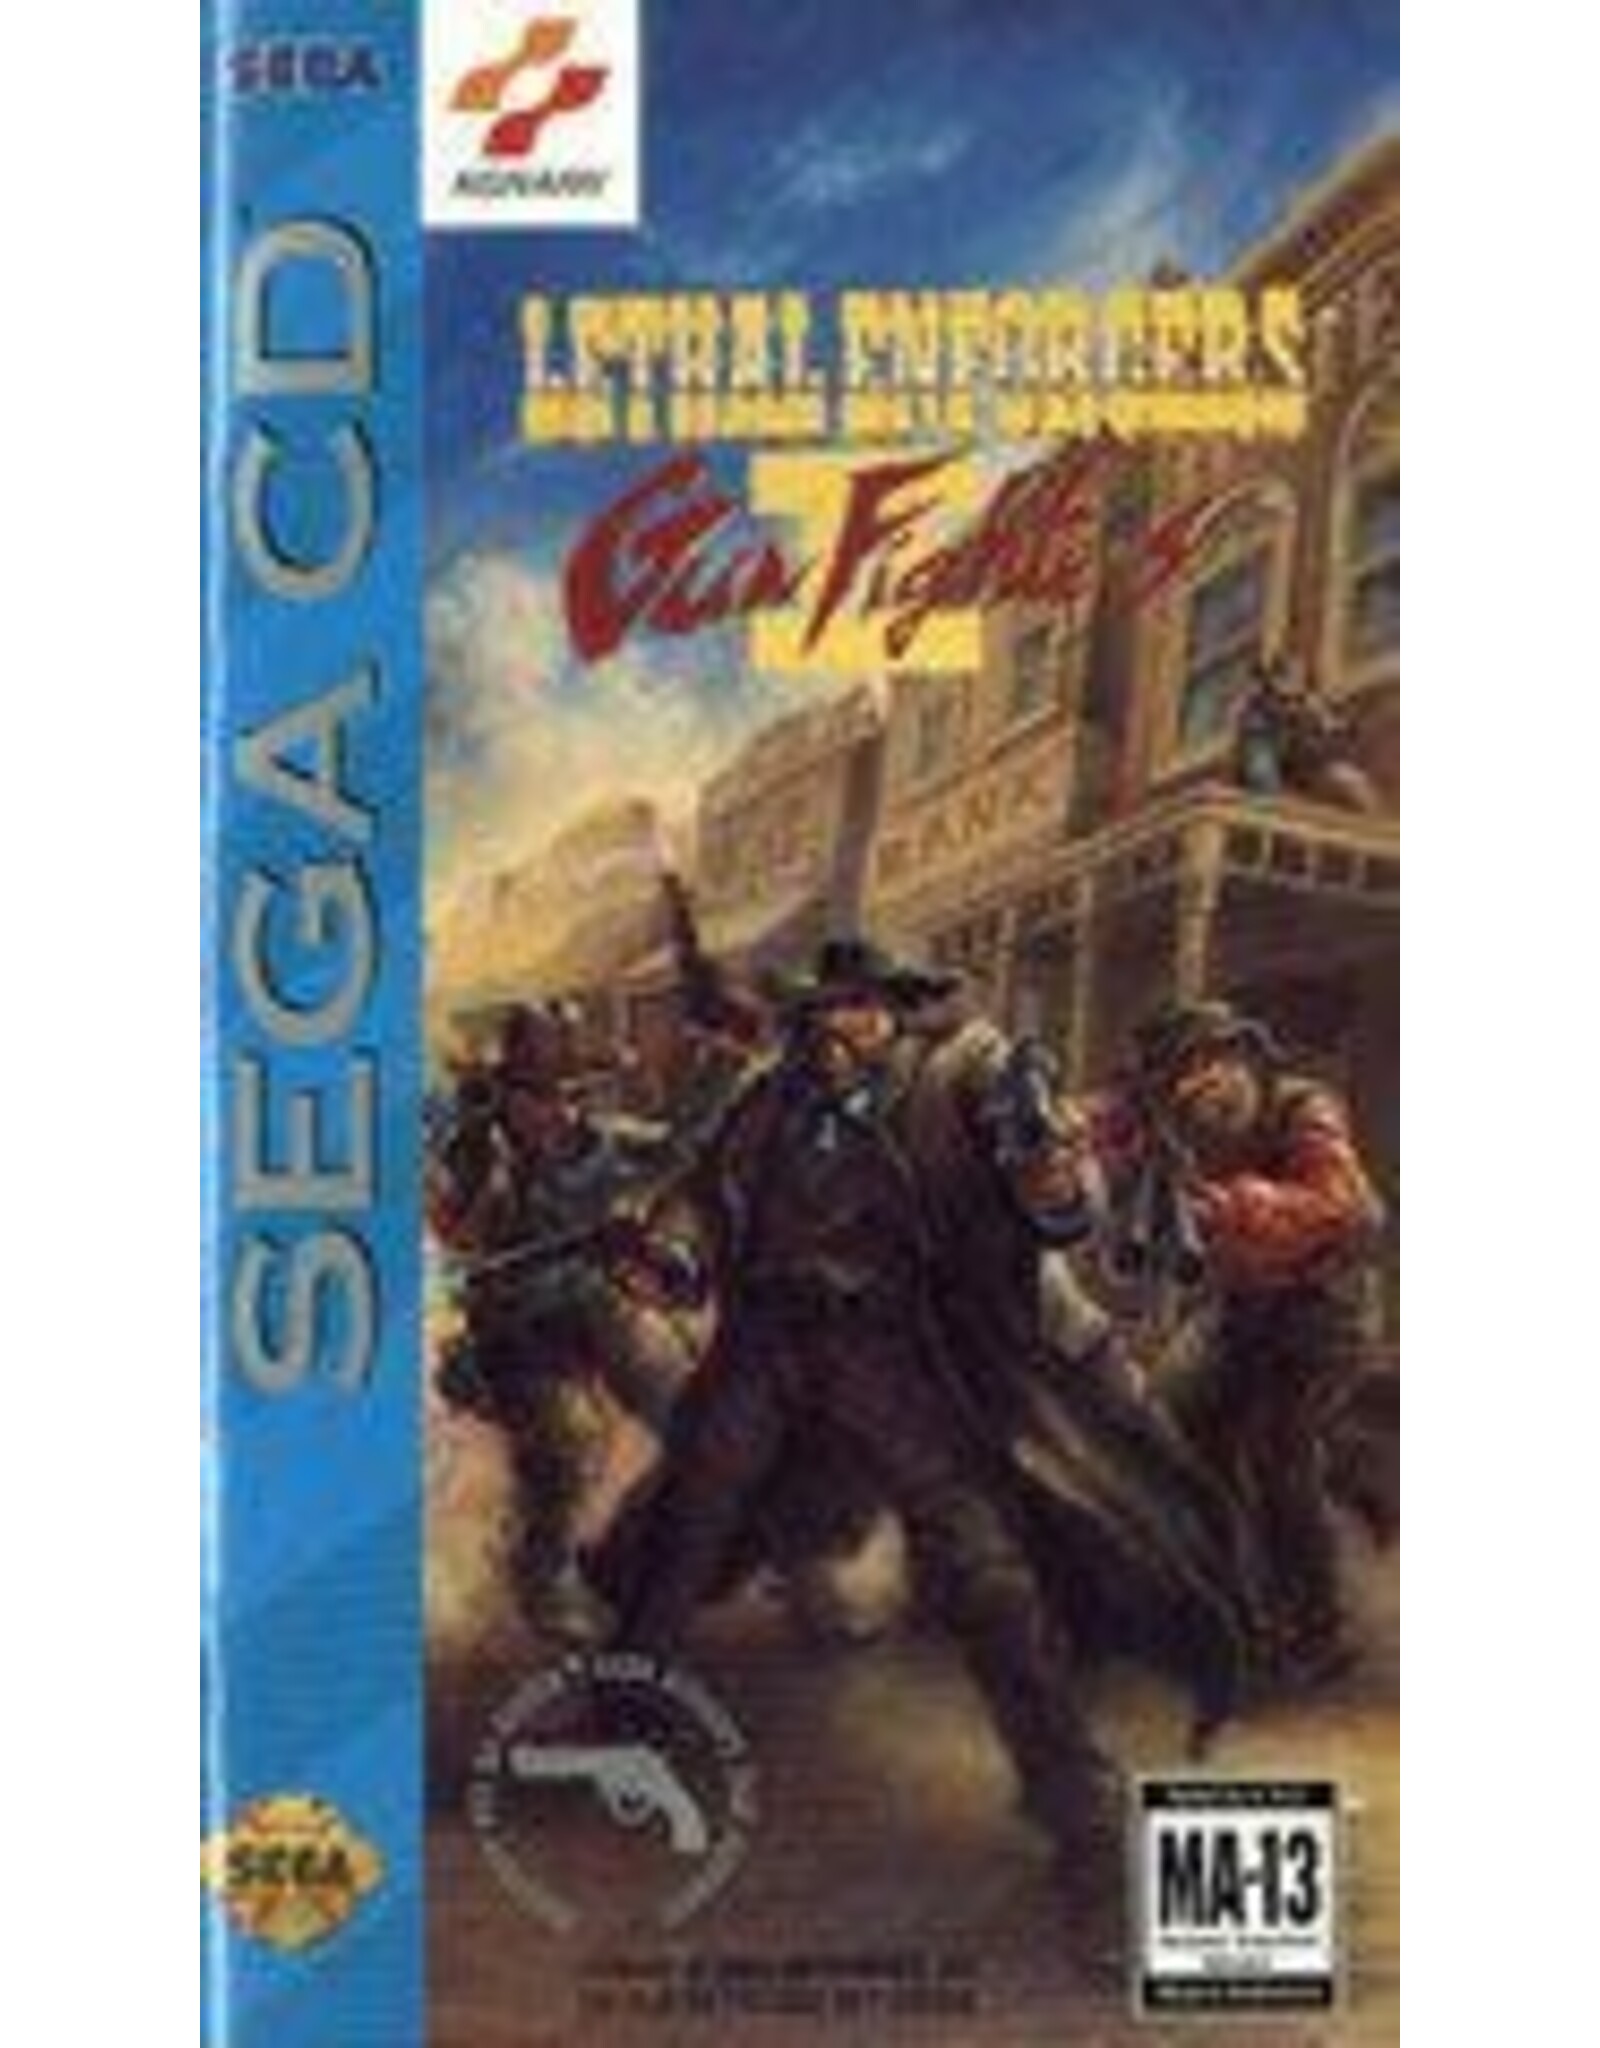 Sega CD Lethal Enforcers II Gun Fighters (No Manual, Sticker on Disc)